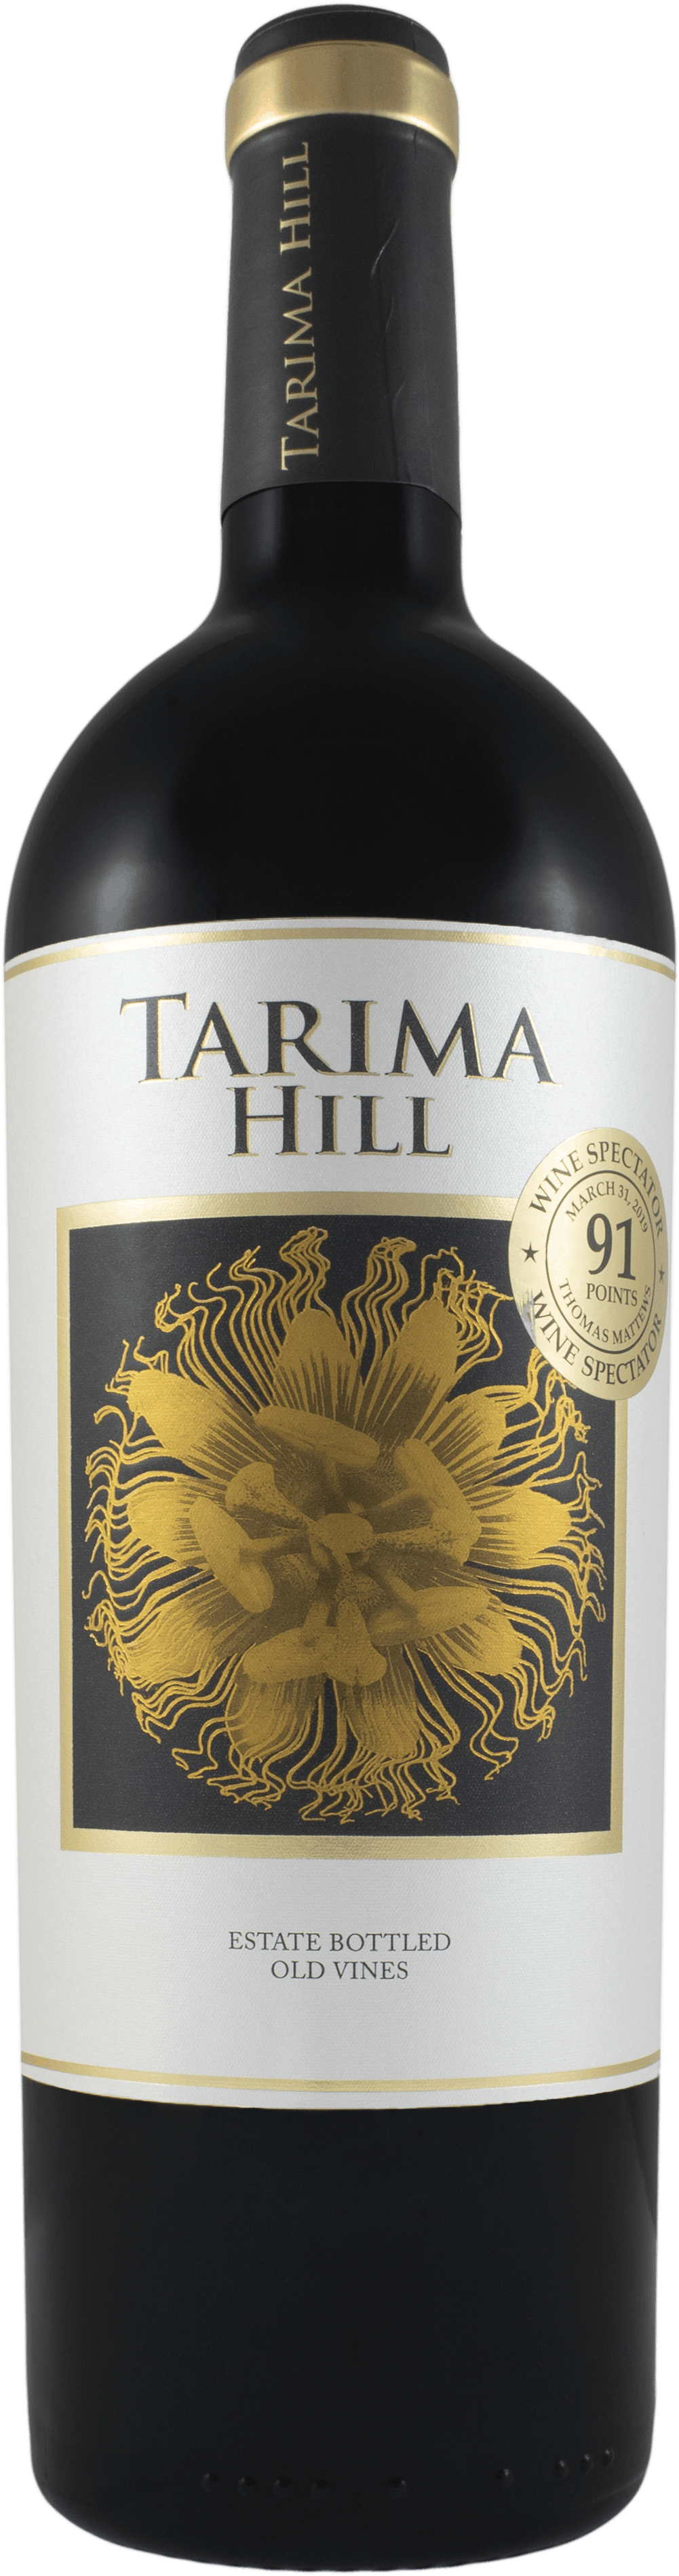 Volver, Tarima Hill Monastrell Old Vines 2015 (1x150cl) - TwoMoreGlasses.com